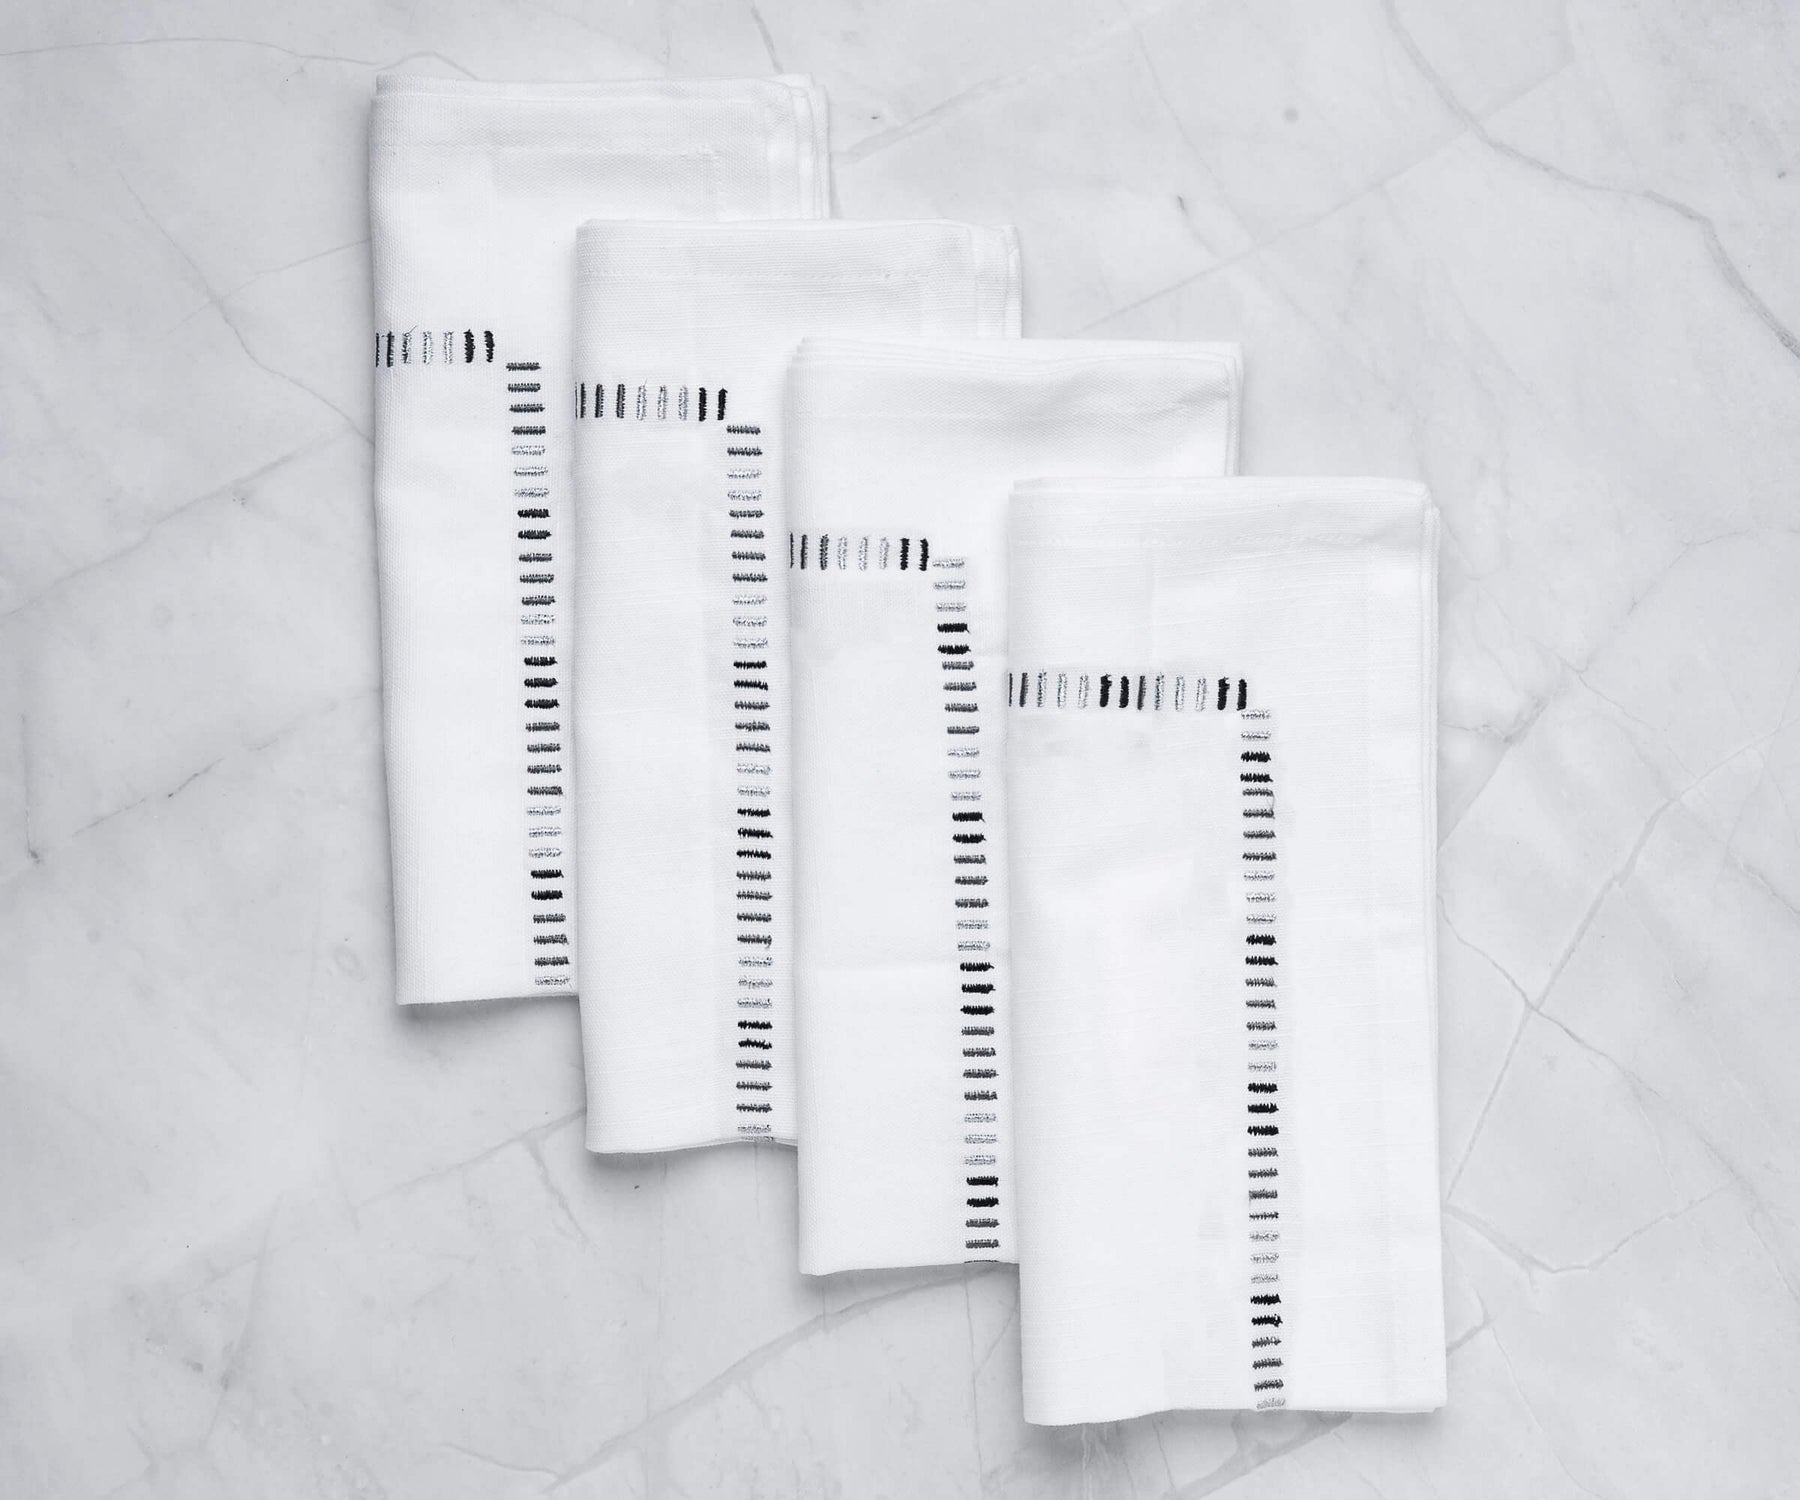 Cloth dinner napkins, instructions on folding a dinner napkin, cotton dinner napkins, white dinner napkins, and black dinner napkins are all available options.